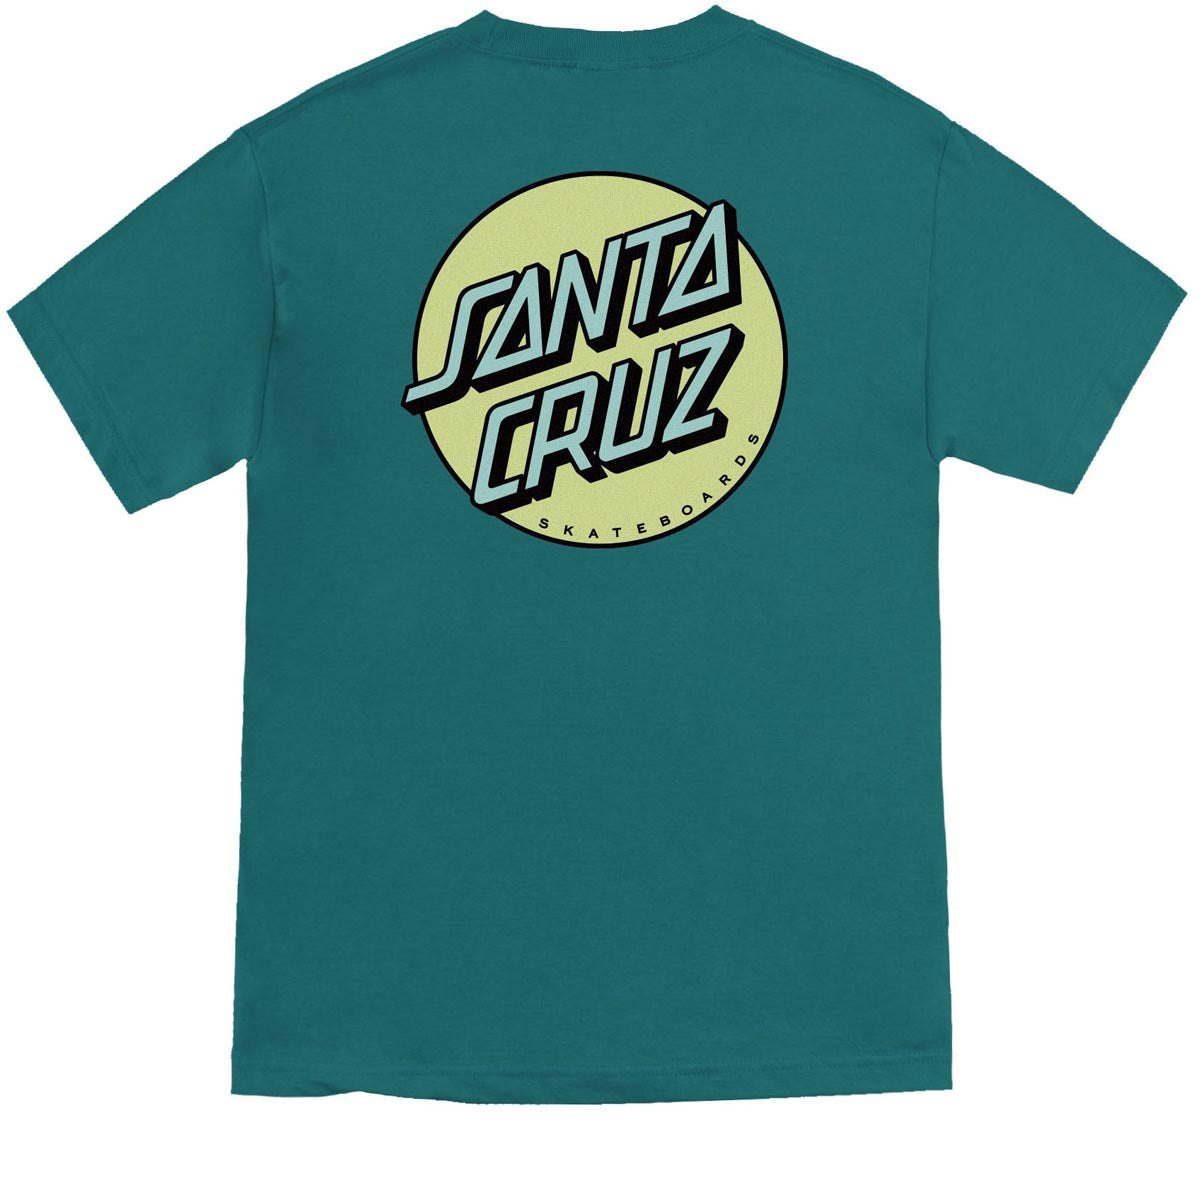 Santa Cruz Other Dot T-Shirt - Teal/Lime image 2